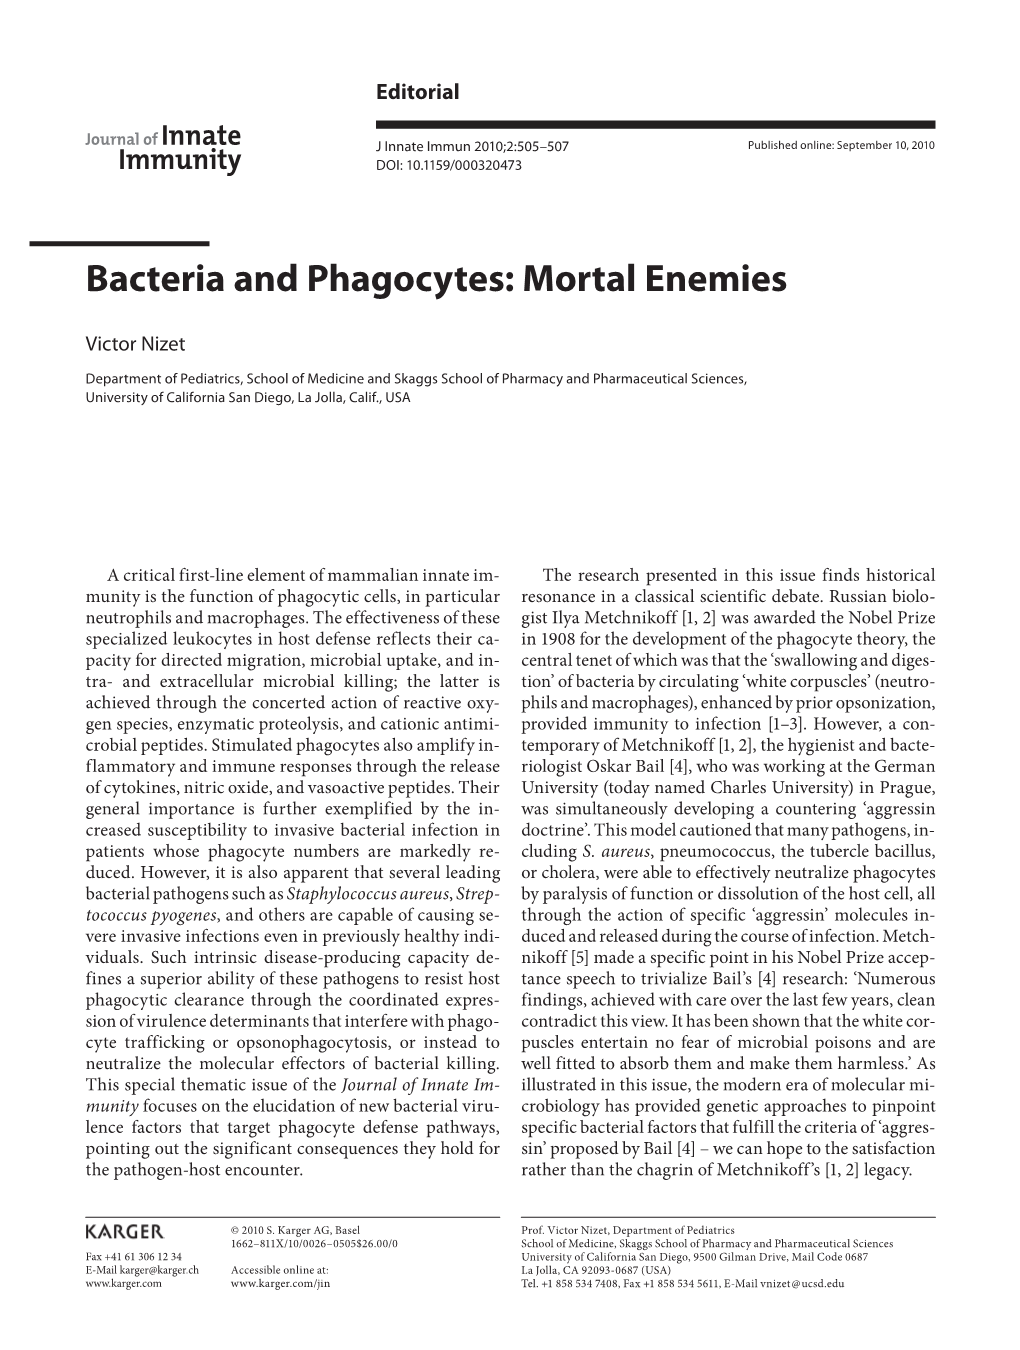 Bacteria and Phagocytes: Mortal Enemies